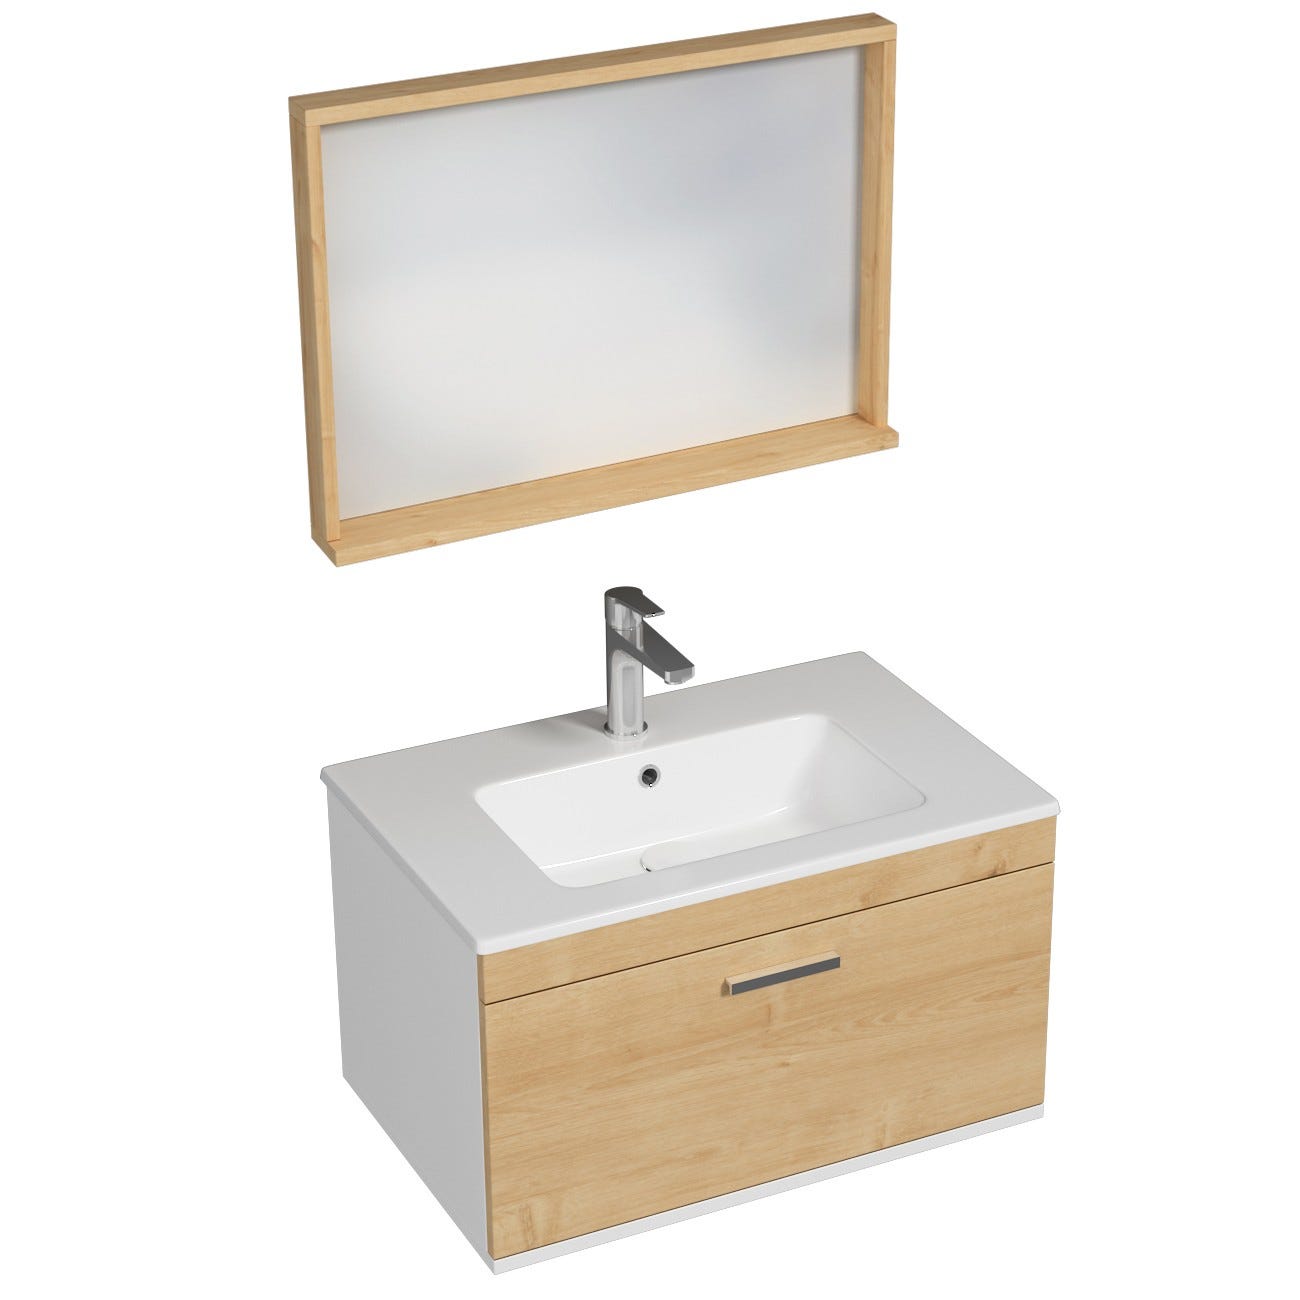 RUBITE Meuble salle de bain simple vasque 1 tiroir chêne clair largeur 70 cm + miroir cadre 1